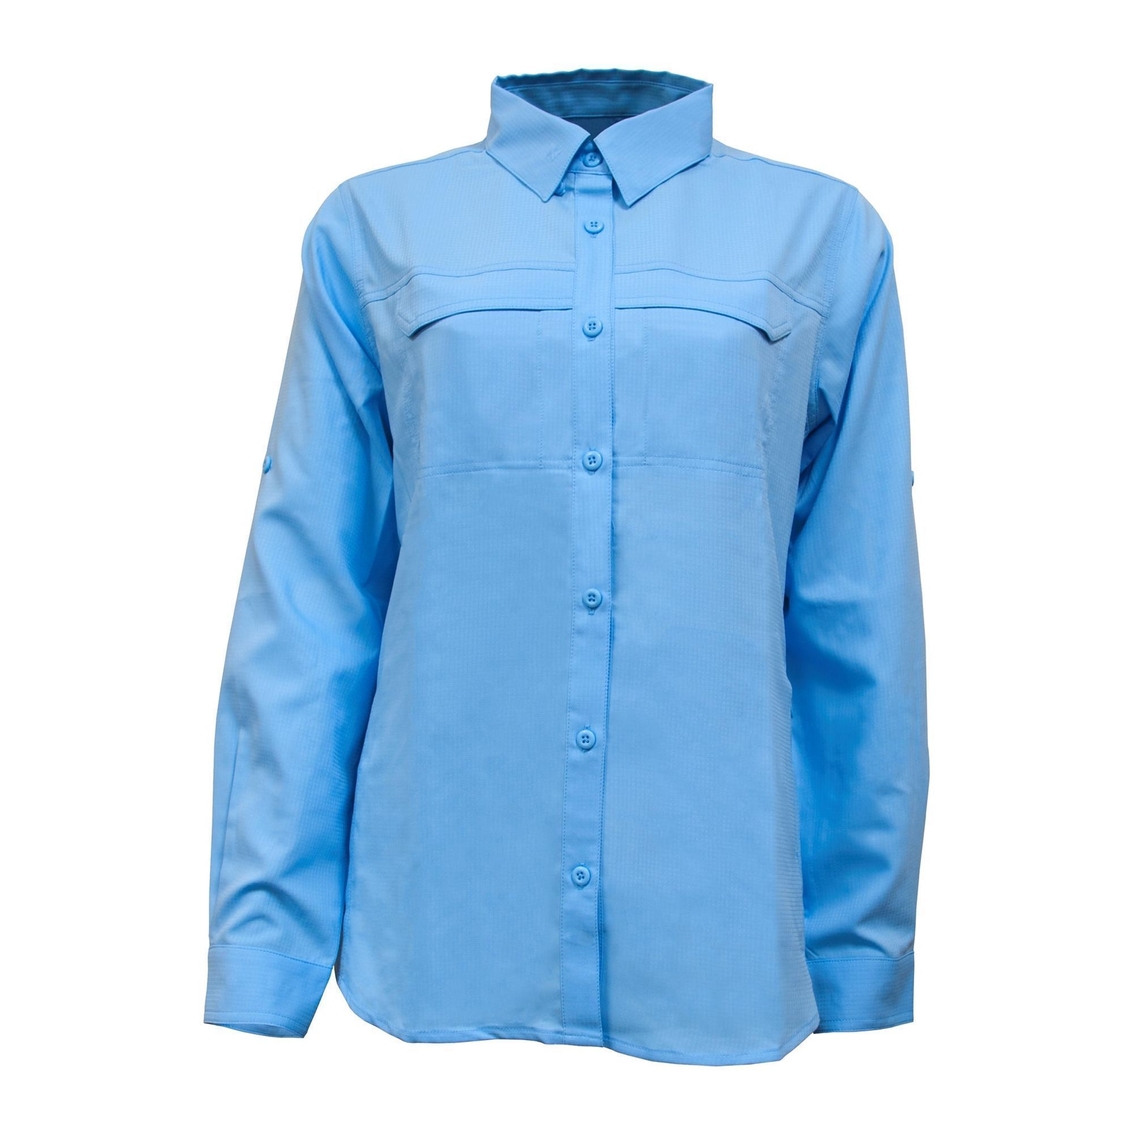 M-lpfs3001l-mojo Sportswear Ladies Sowal Technical Fishing Shirt-long  Sleeve-oct, Tops, Clothing & Accessories